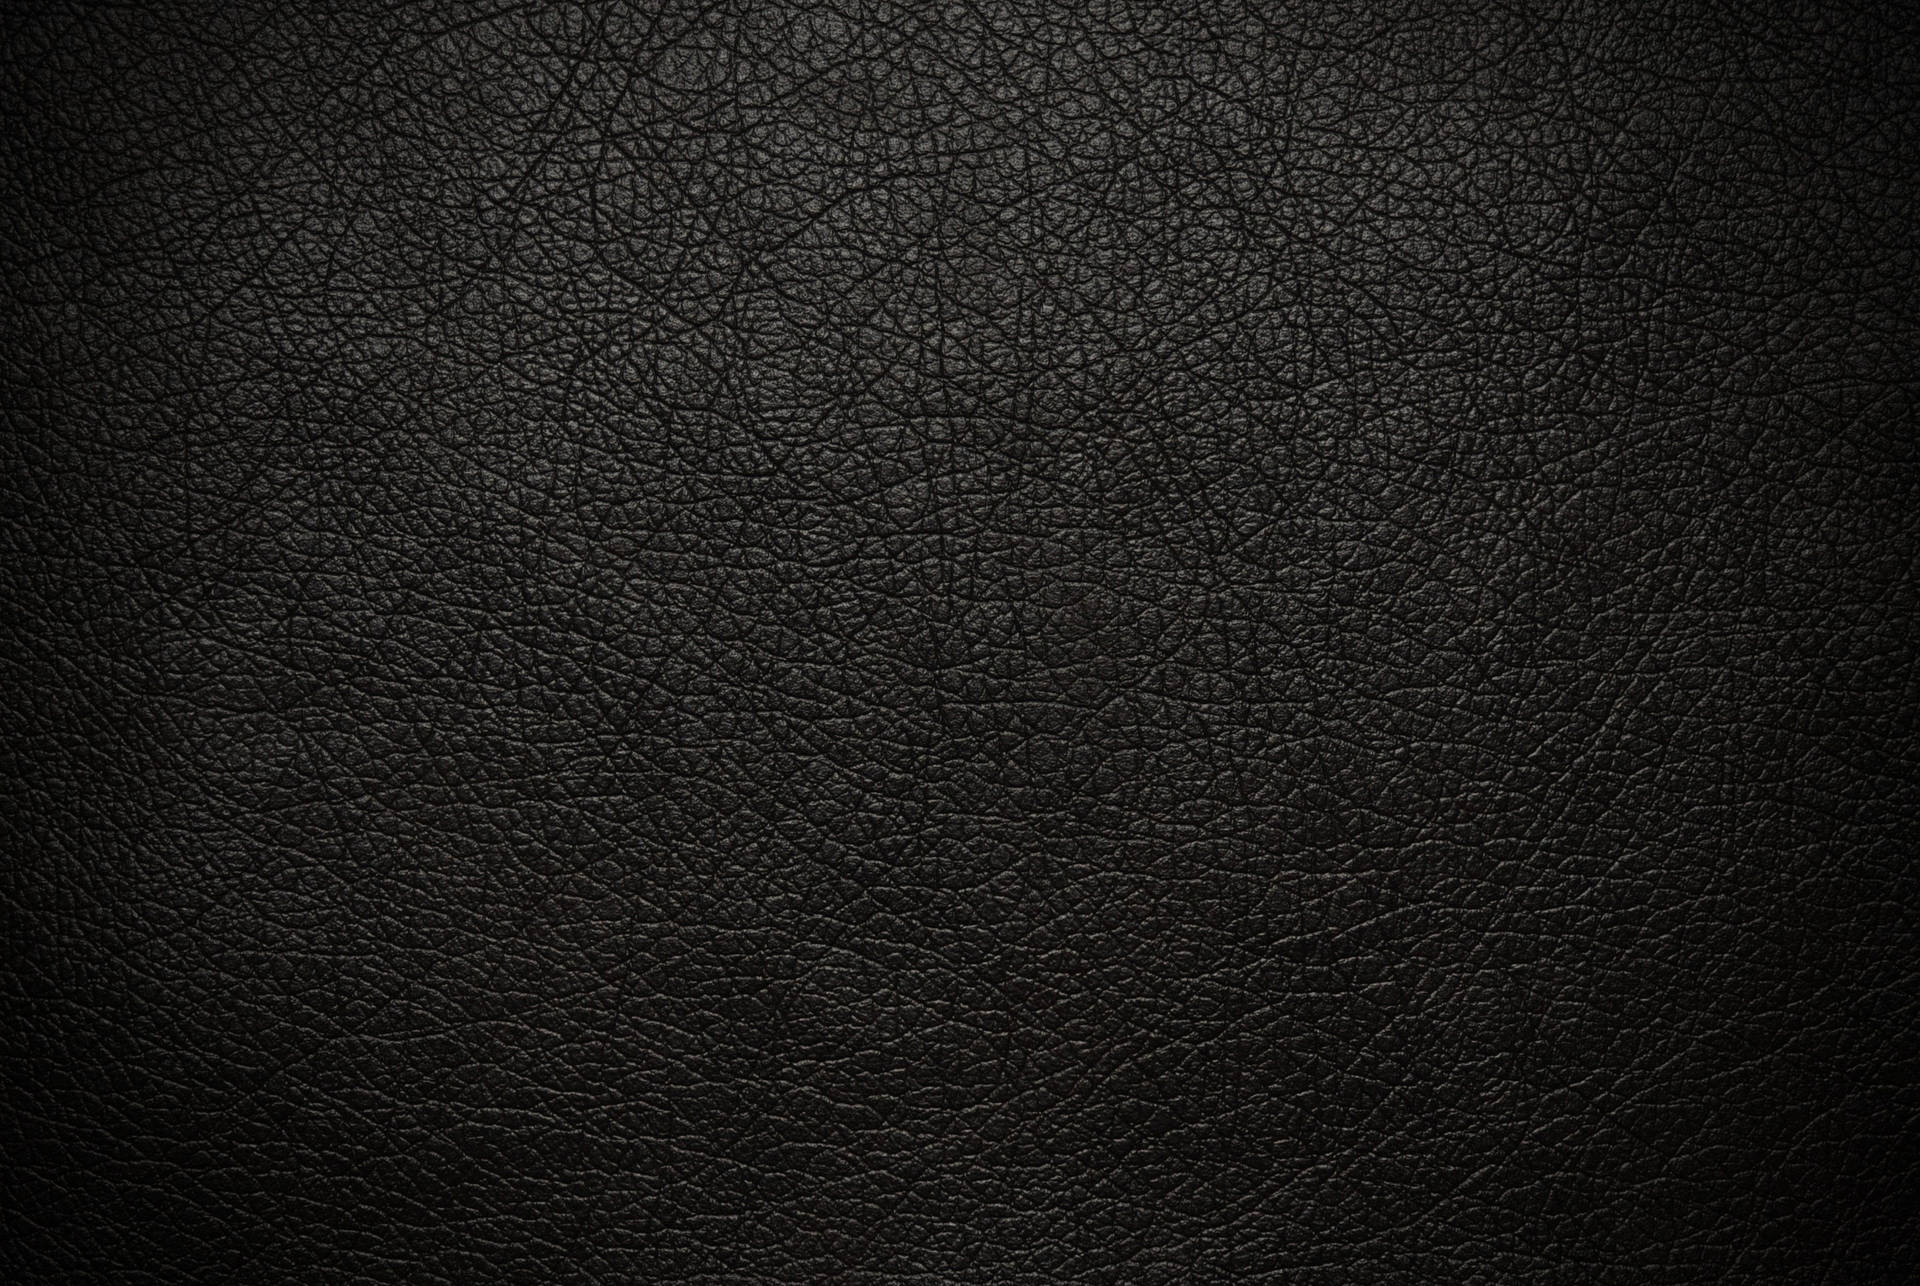 Texture Fine Black Leather Wallpaper